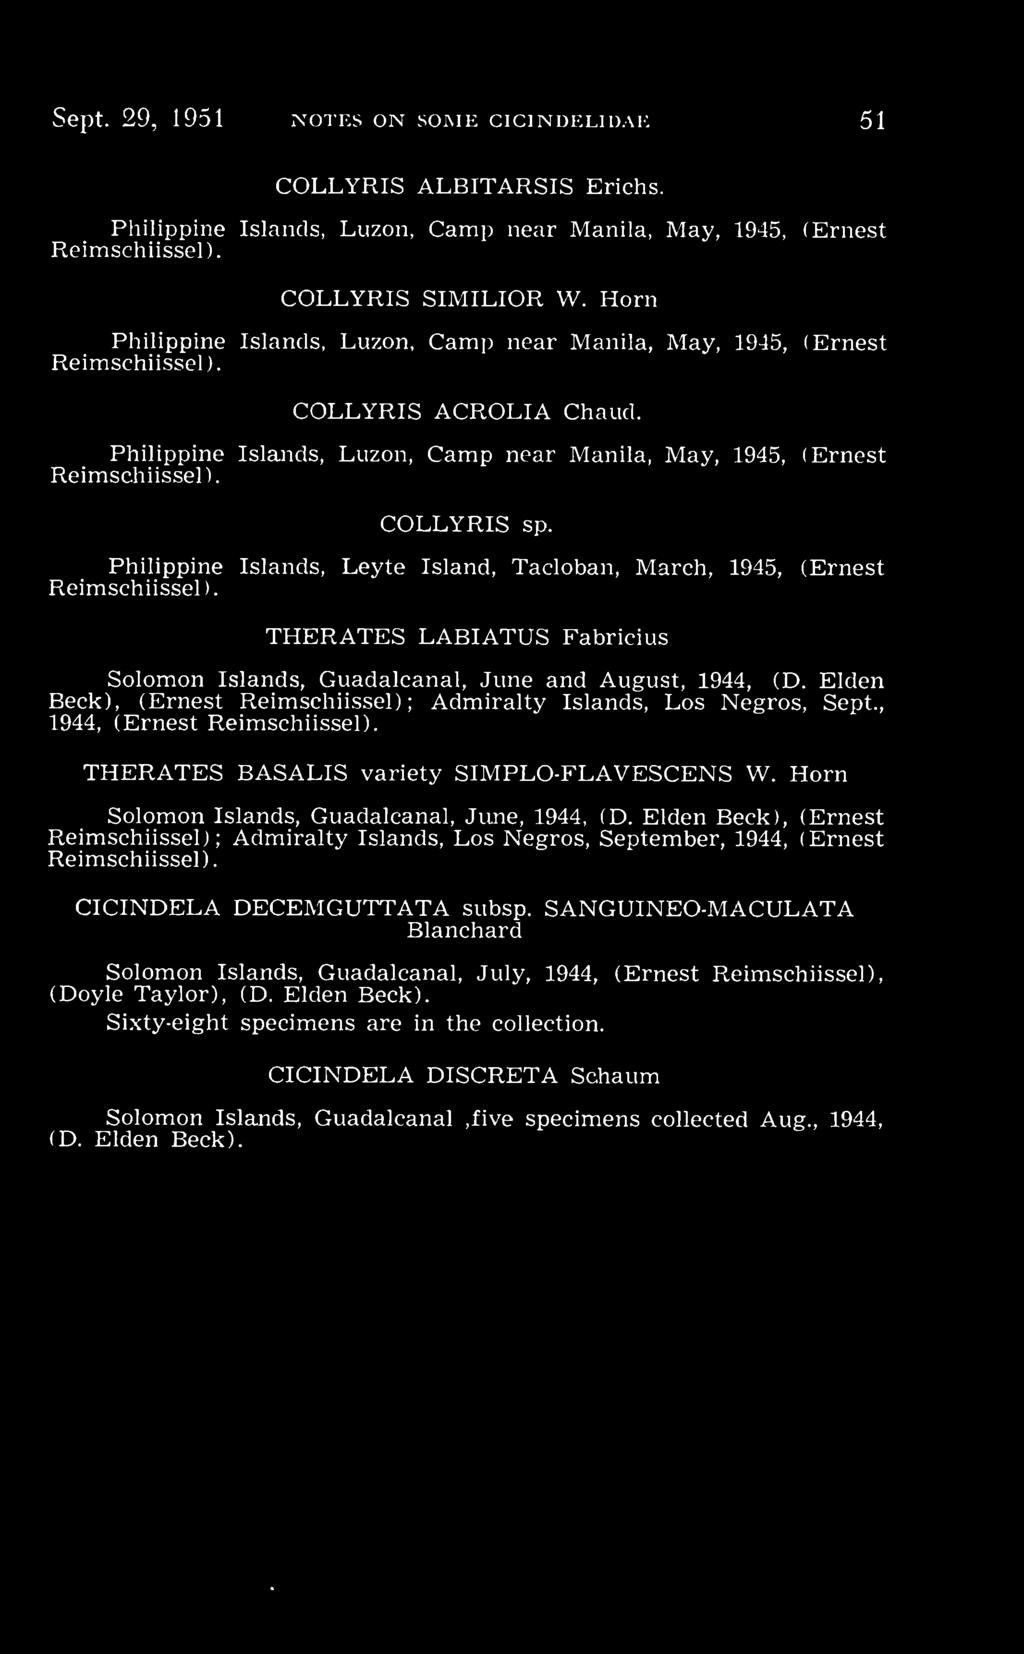 Elden Beck), (Ernest Reimschiissel); Admiralty Islands, Los Negros, Sept., 1944, (Ernest THERATES BASALIS variety SIMPLO-FLAVESCENS W. Horn Solomon Islands, Guadalcanal, June, 1944, (D.